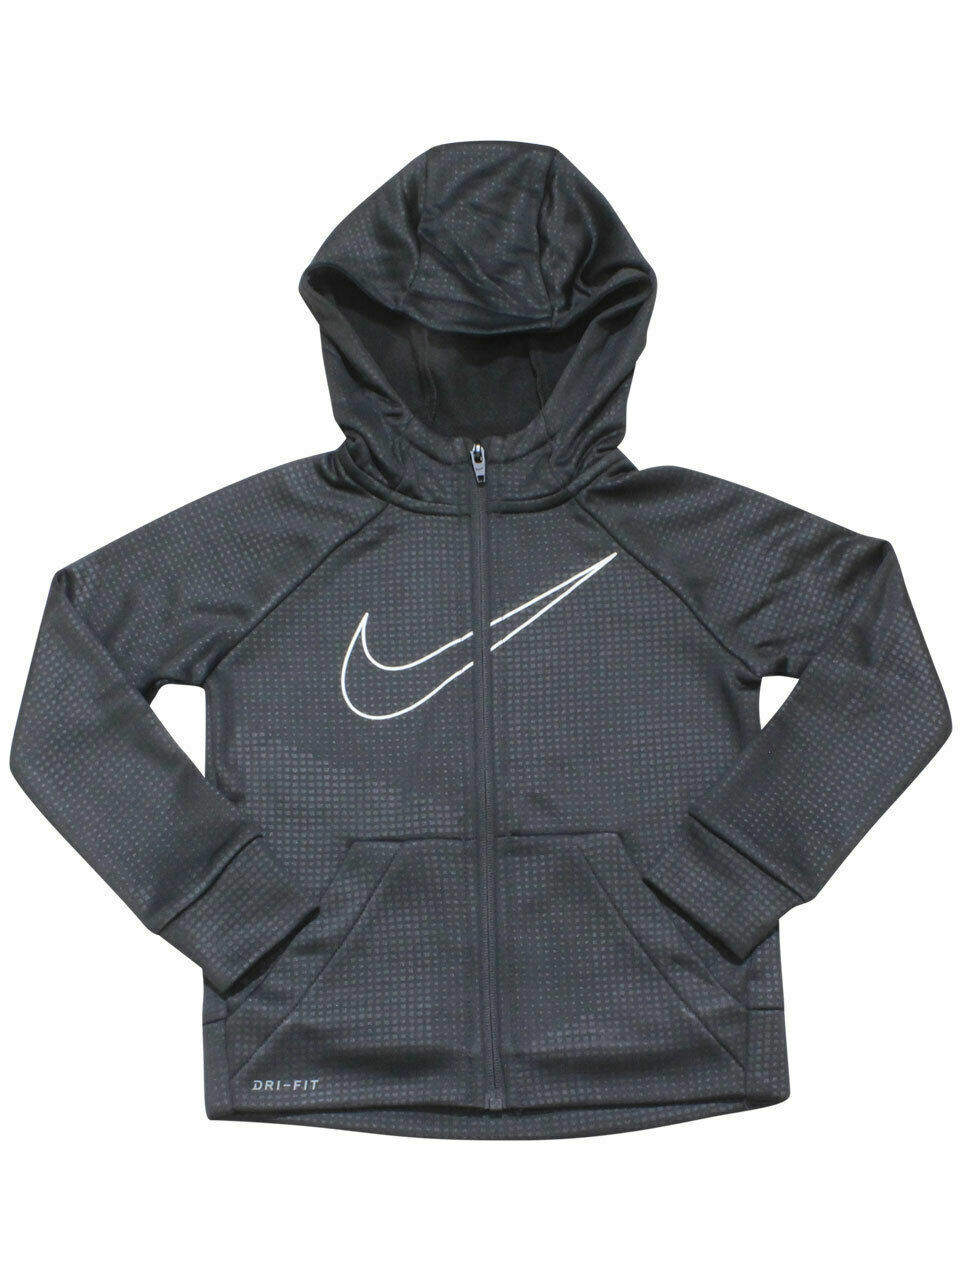 Quantity limited Nike Boy's Zip-Up Hoodie Sweatshirt Swoosh Super intense SALE Anthracite Pixel